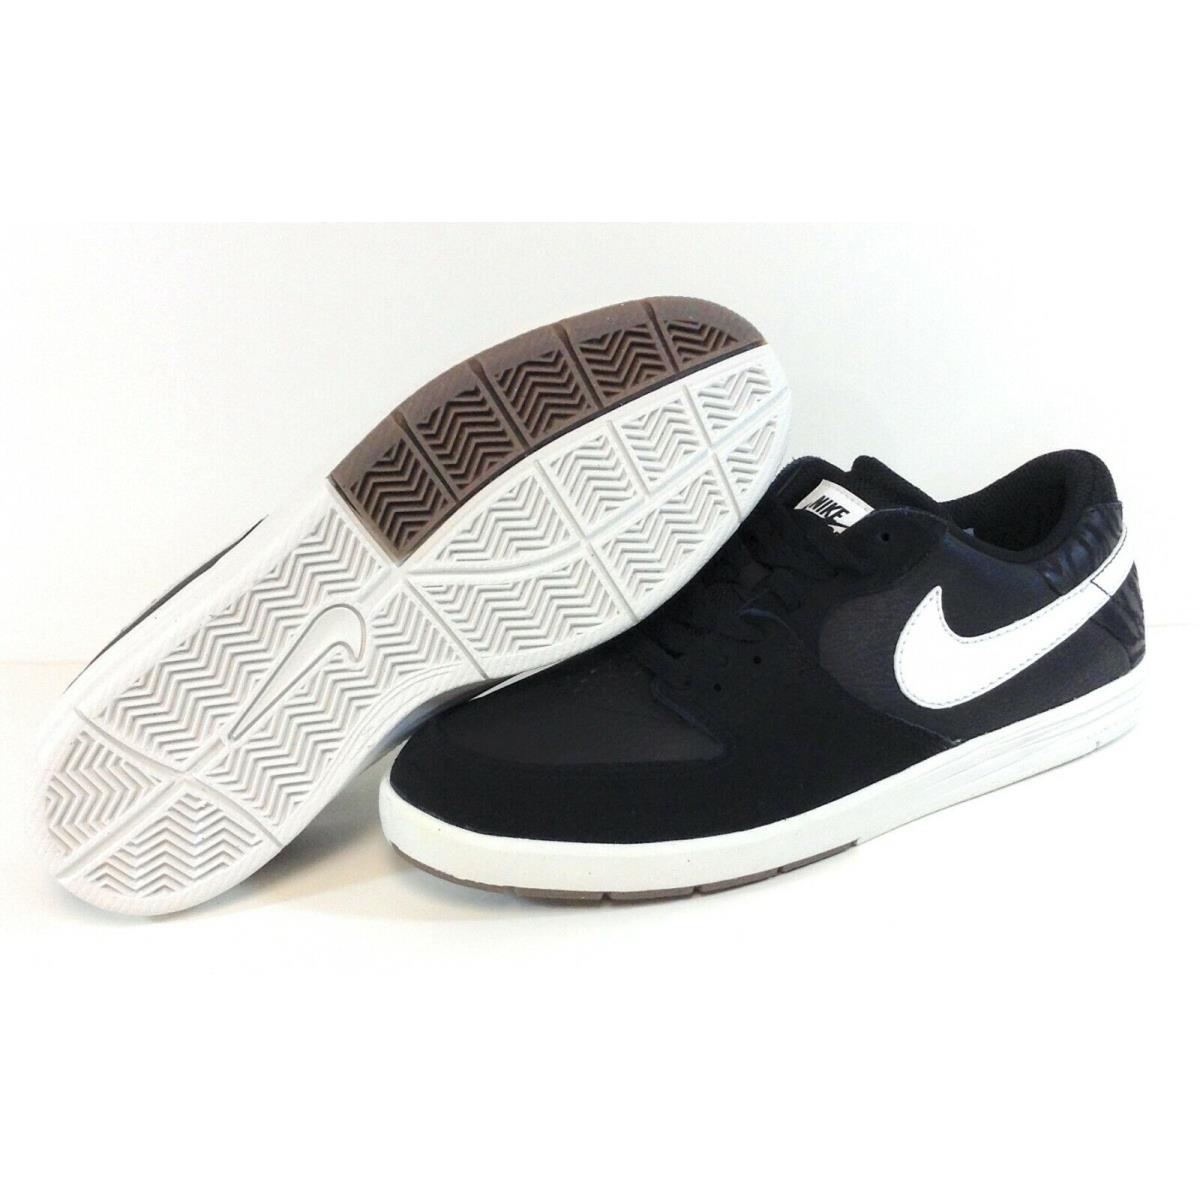 Boys Kids Youth Nike SB Paul Rodriguez 7 599657 010 Black 2013 DS Sneakers Shoes - Black